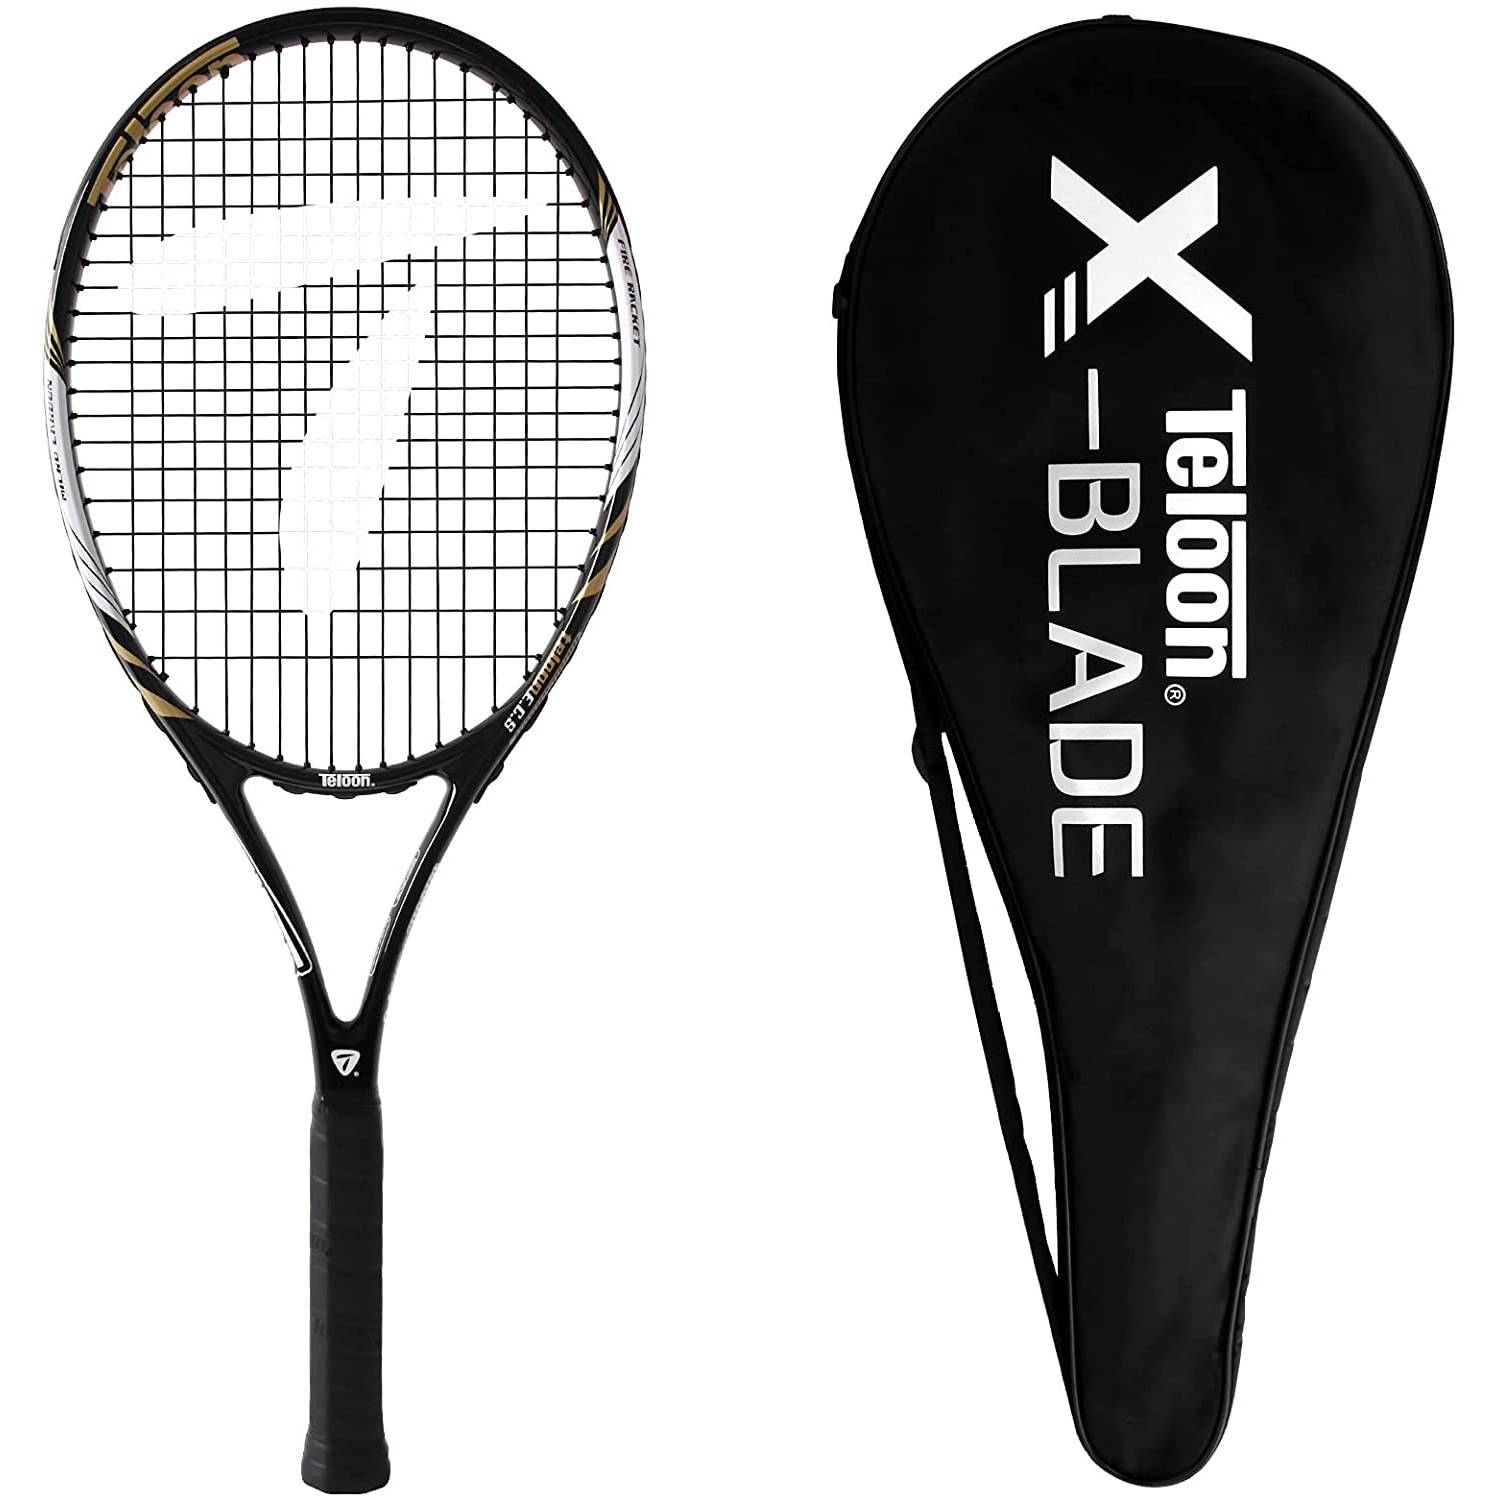 TELOON Raqueta Tenis Adulto Aluminio Nivel Inicial Color Negro